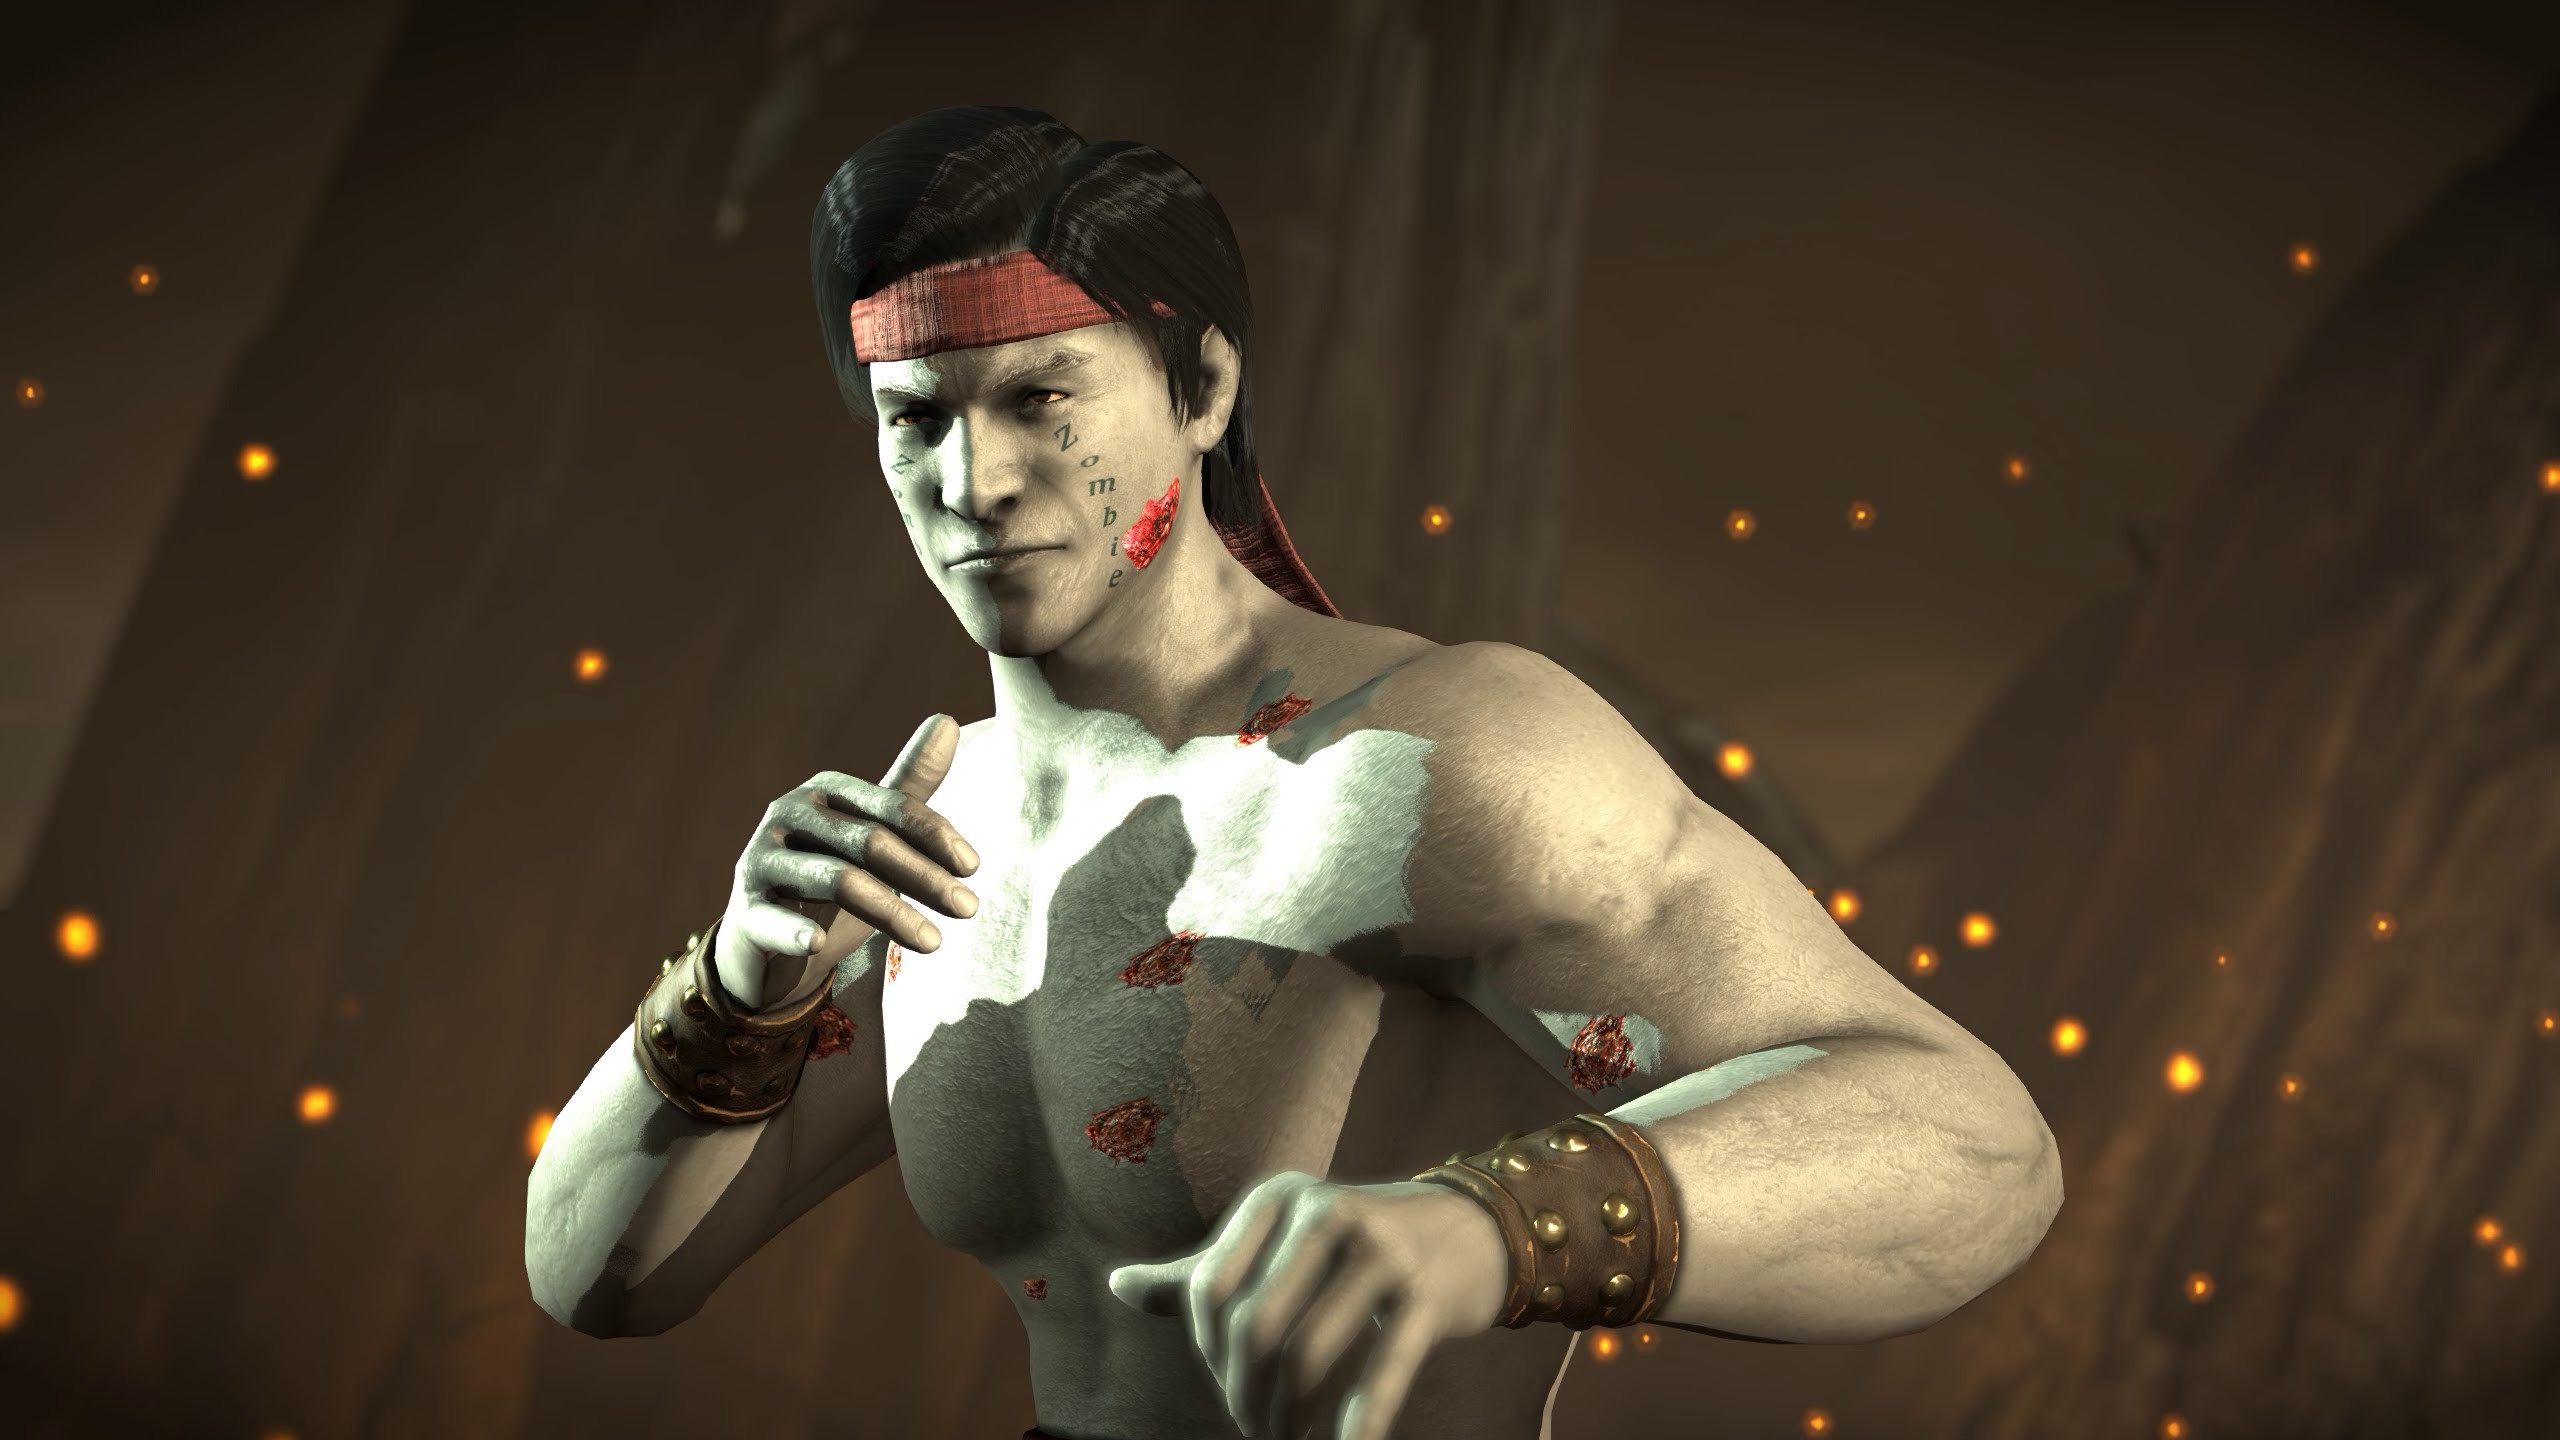 2560x1440 ... Liu Kang on Mortal-Kombat-Fans - DeviantArt ...